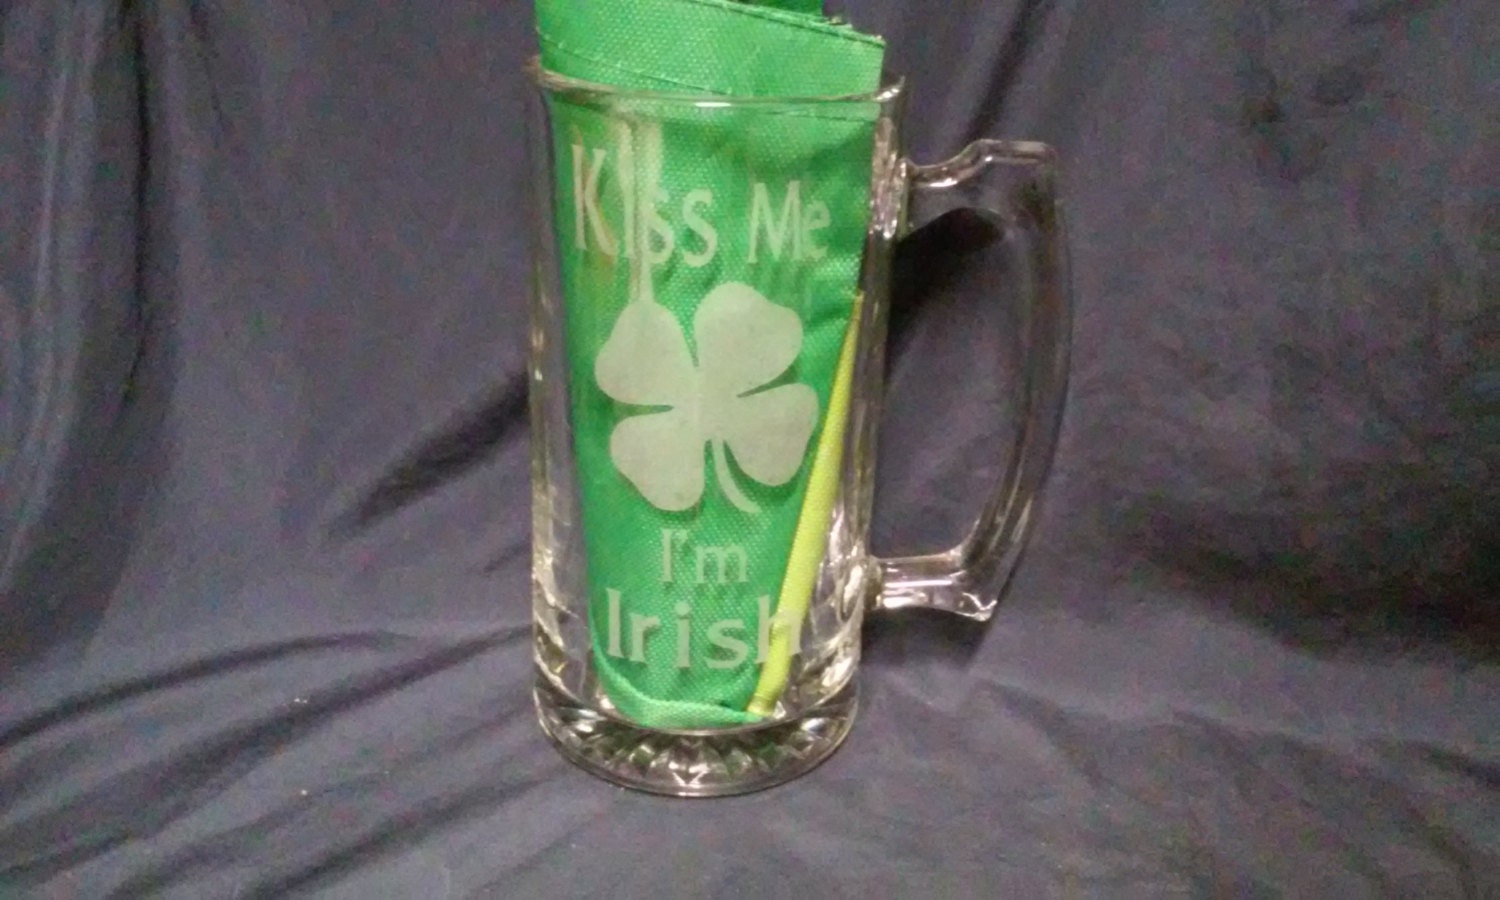 McGillick Irish Coat of Arms Glass Beer Mug (Sand Etched)